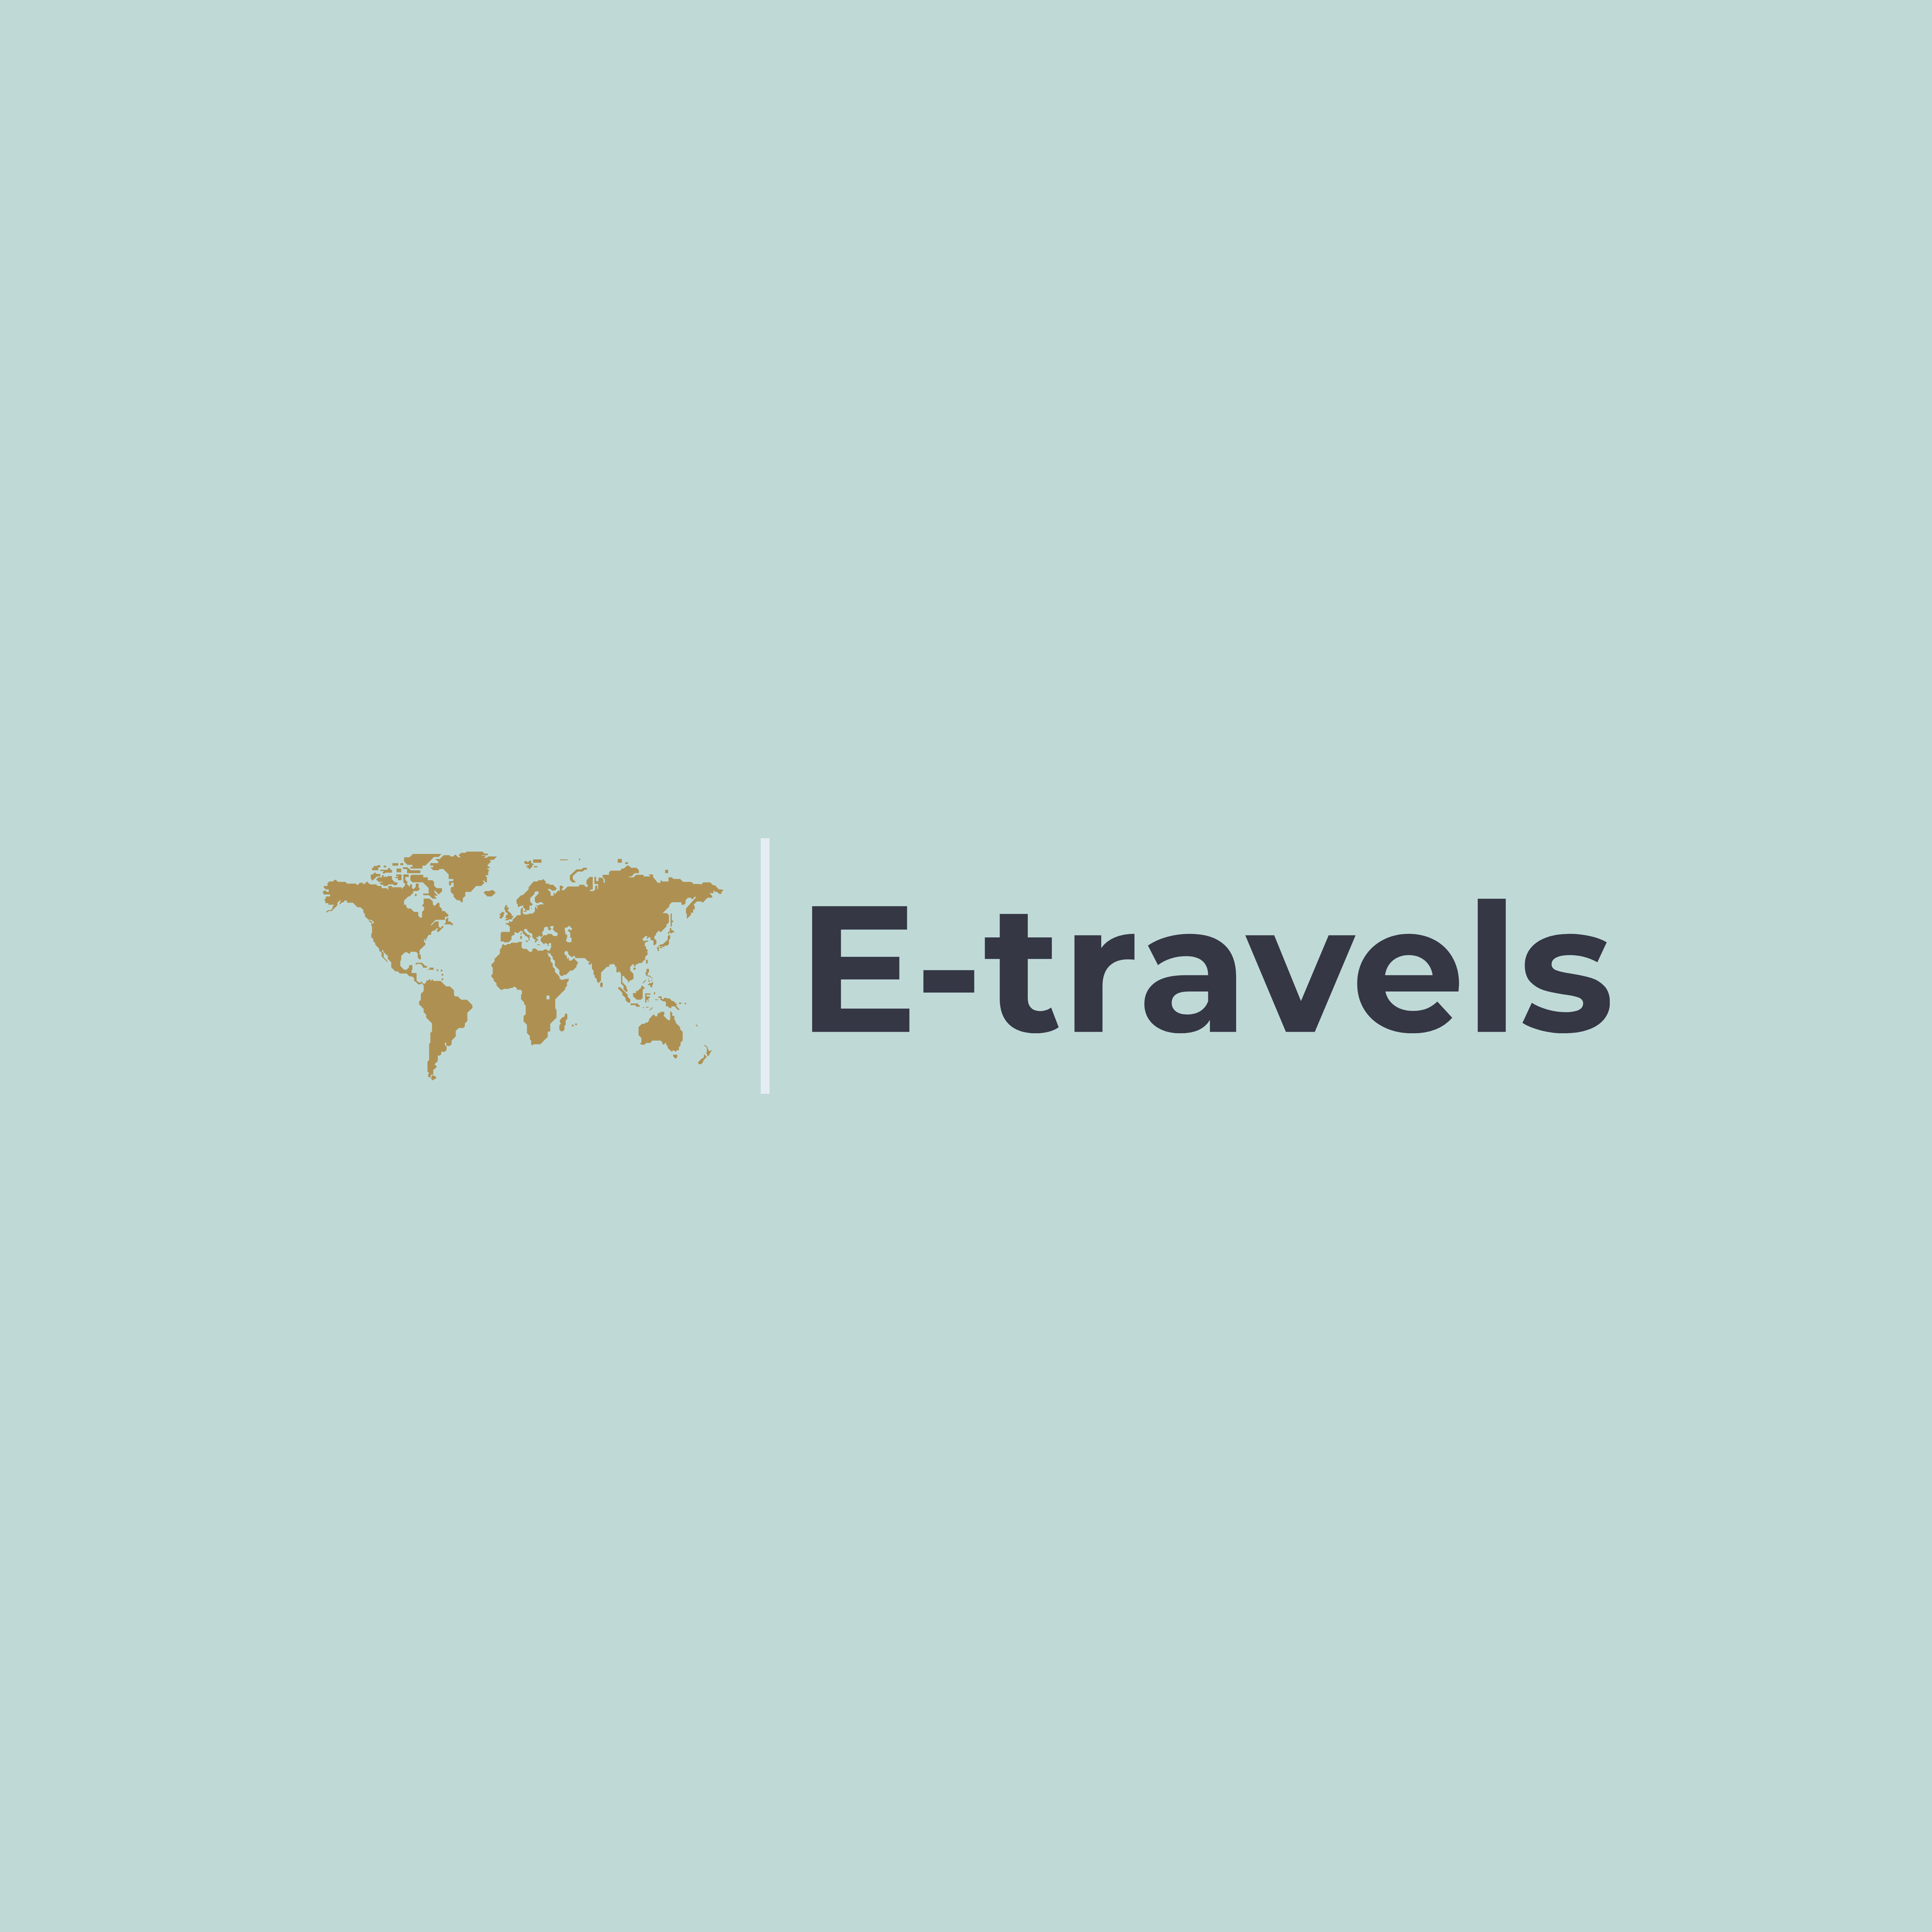 E-travels